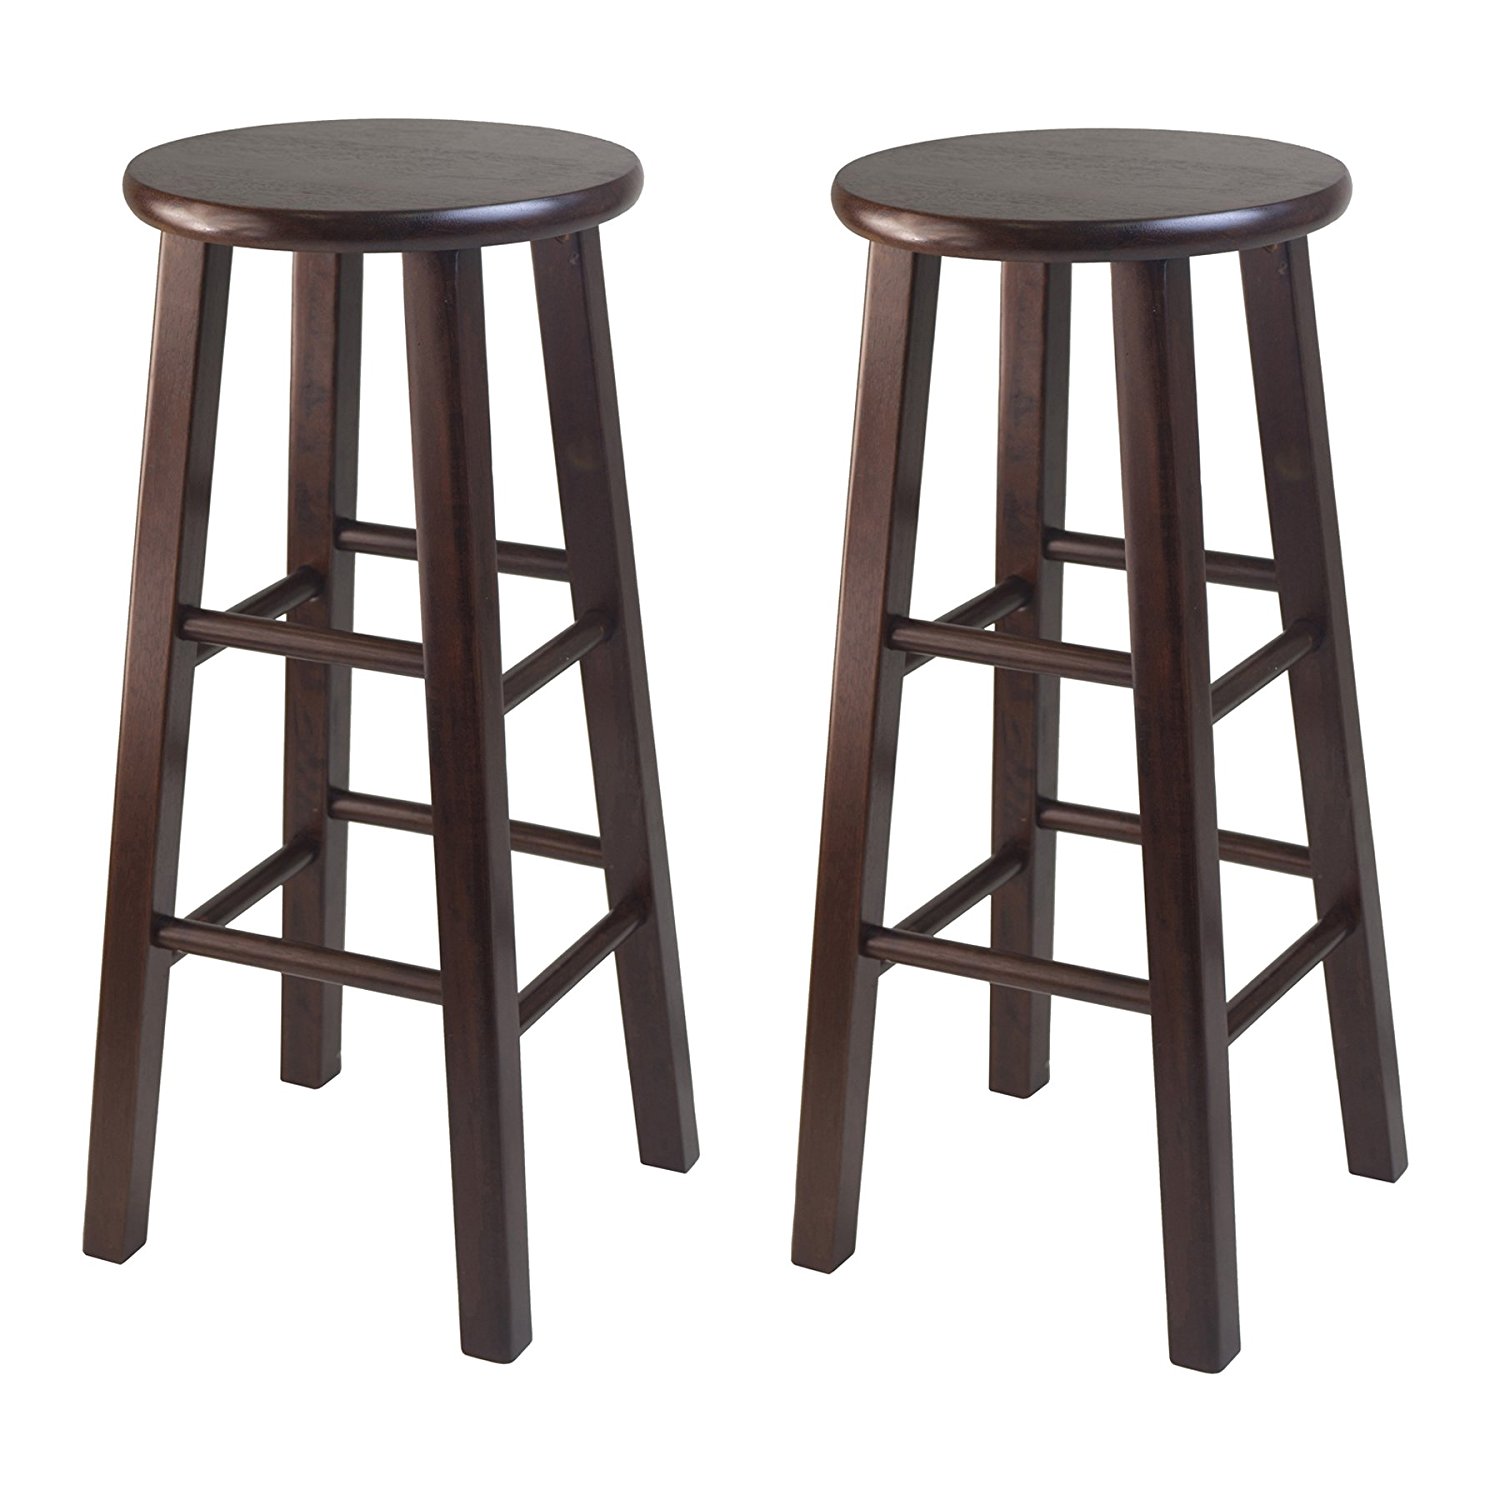 wood bar stools amazon.com: winsome 29-inch square leg bar stool, antique walnut, set of 2: SRYRJFA